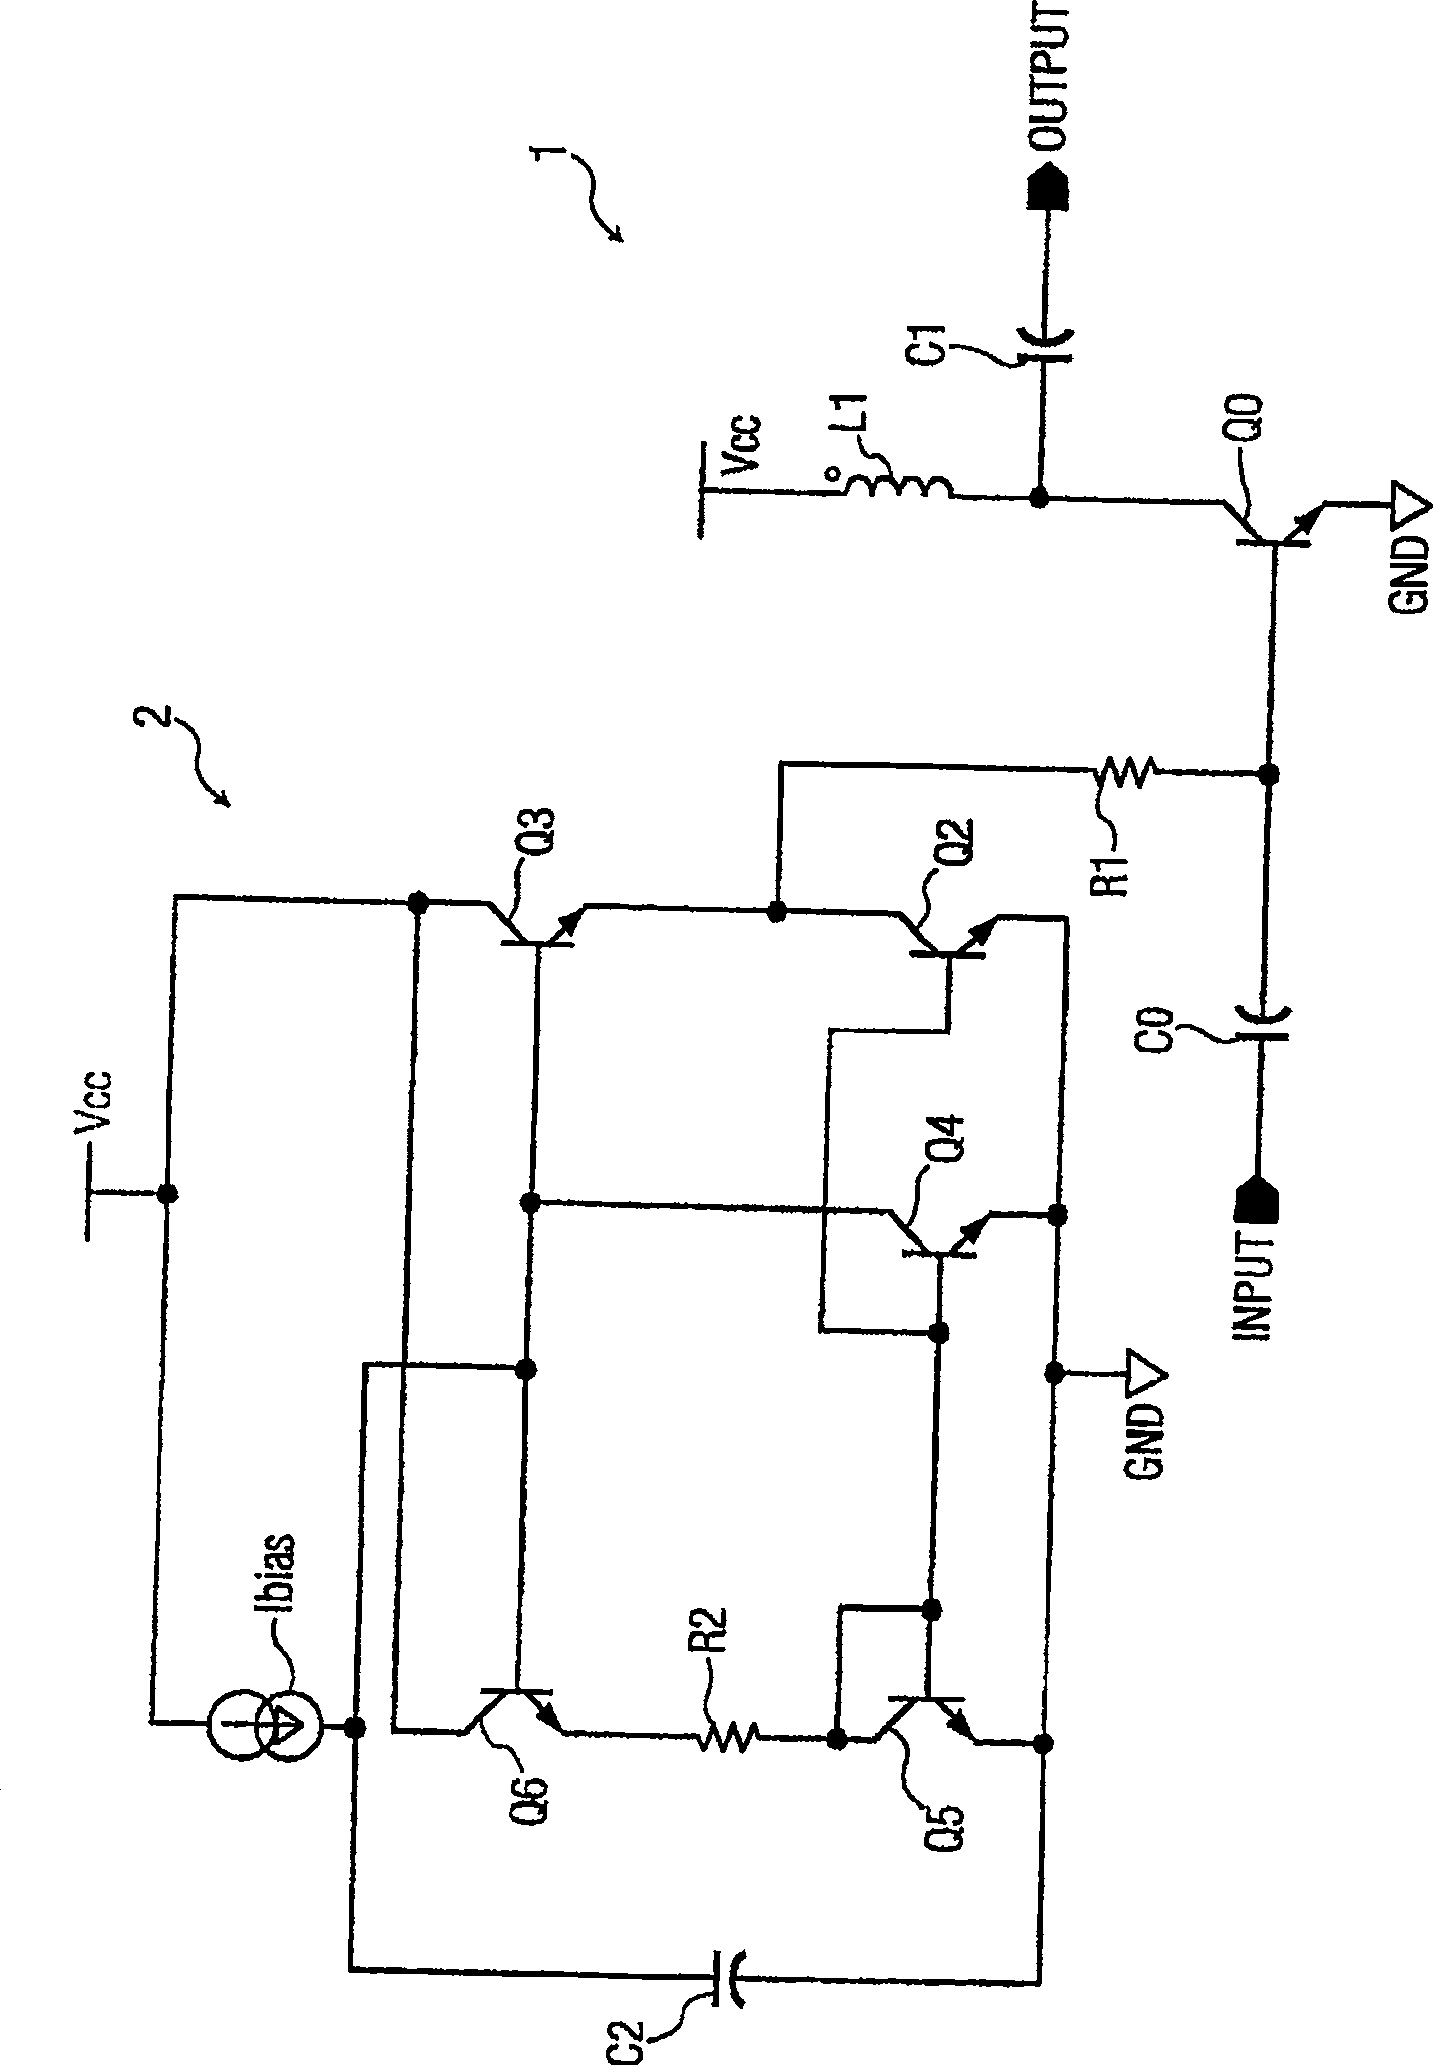 Amplifier circuit having an extended Wilson current-mirror self-bias boosting circuit